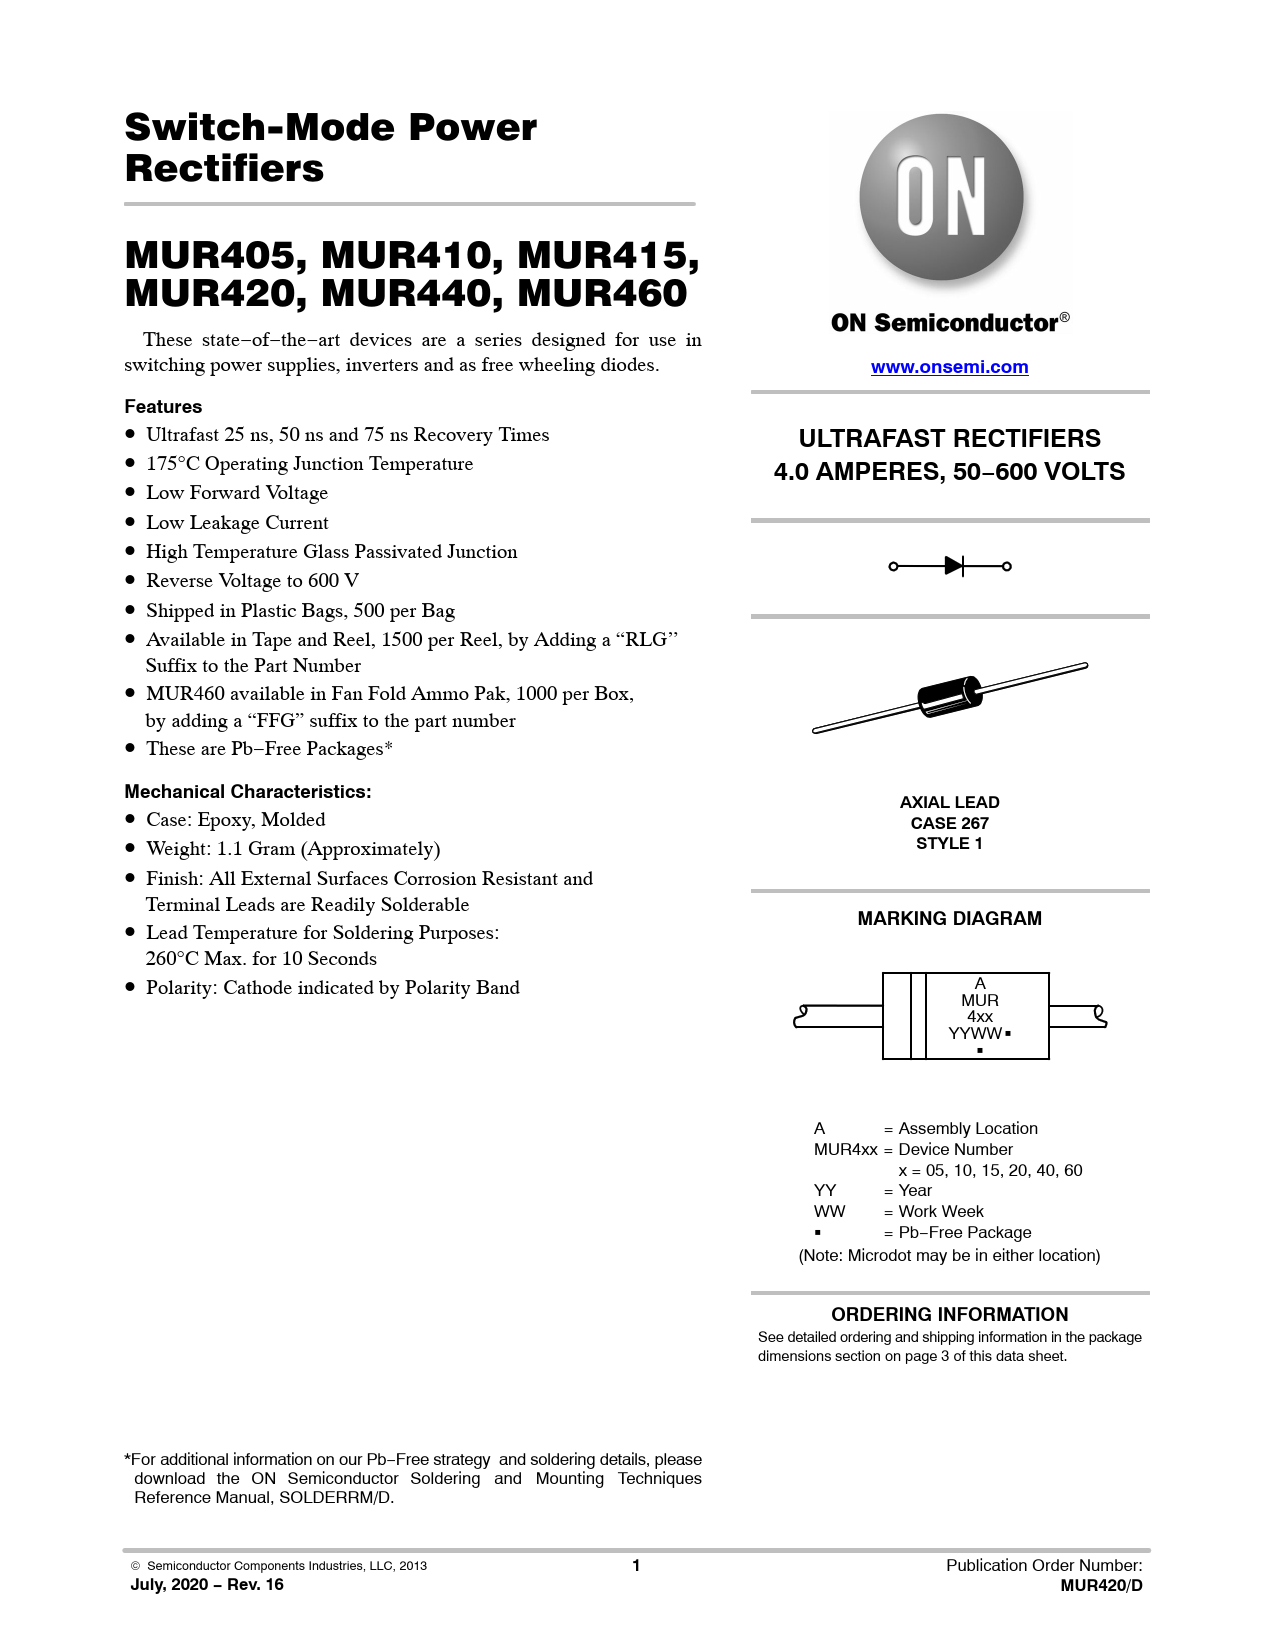 Datasheet MUR405, MUR410, MUR415, MUR420, MUR440, MUR460 ON Semiconductor, Revisión: 16